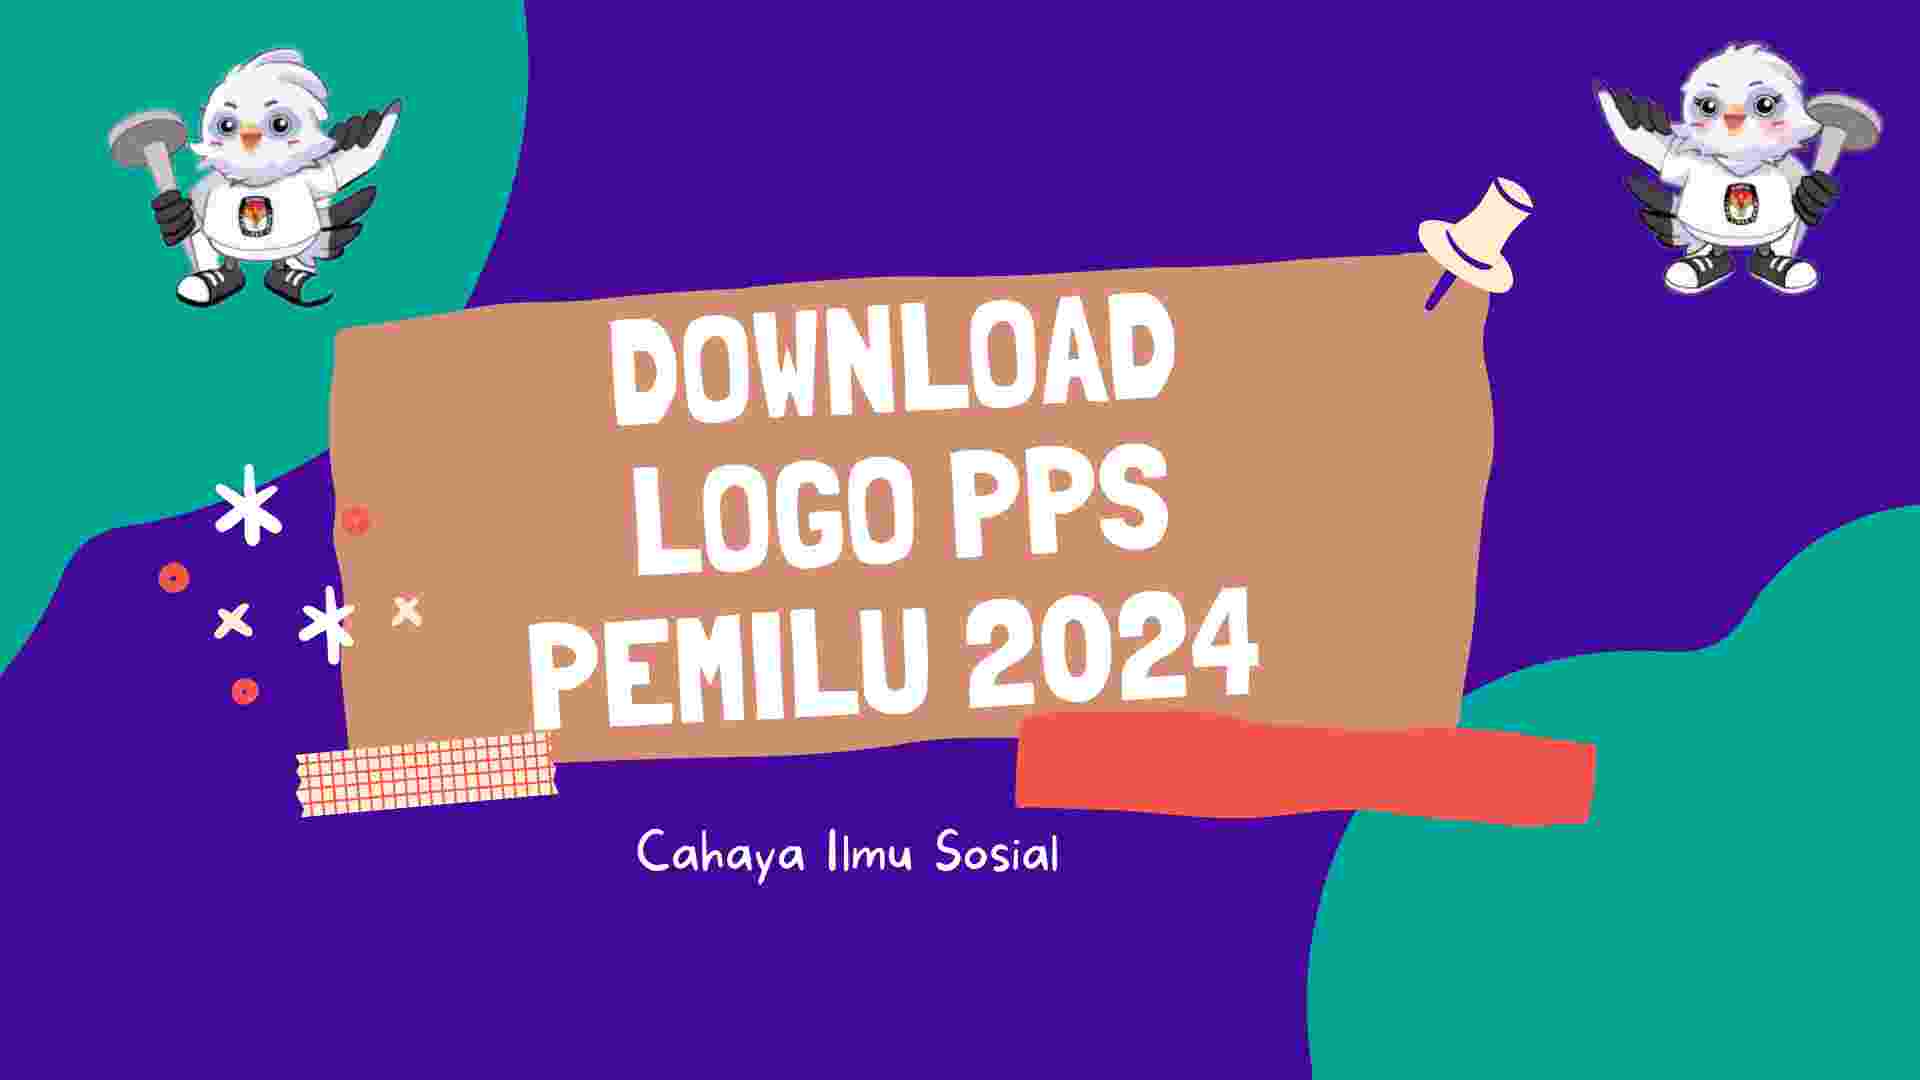 Logo PPS pemilu 2024